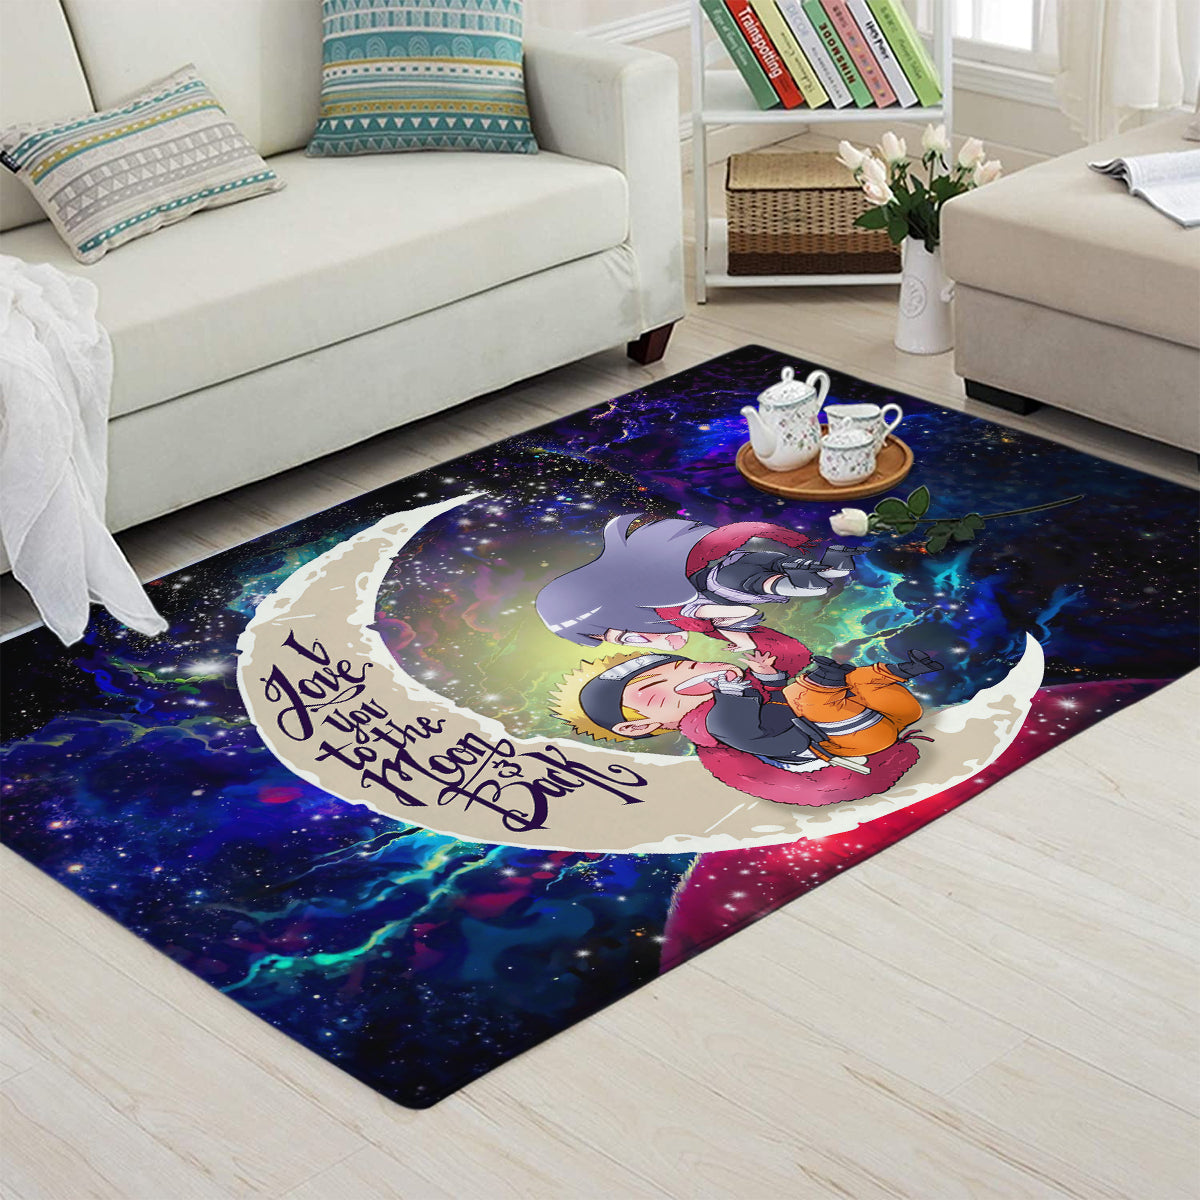 Naruto Couple Love You To The Moon Galaxy Carpet Rug Home Room Decor